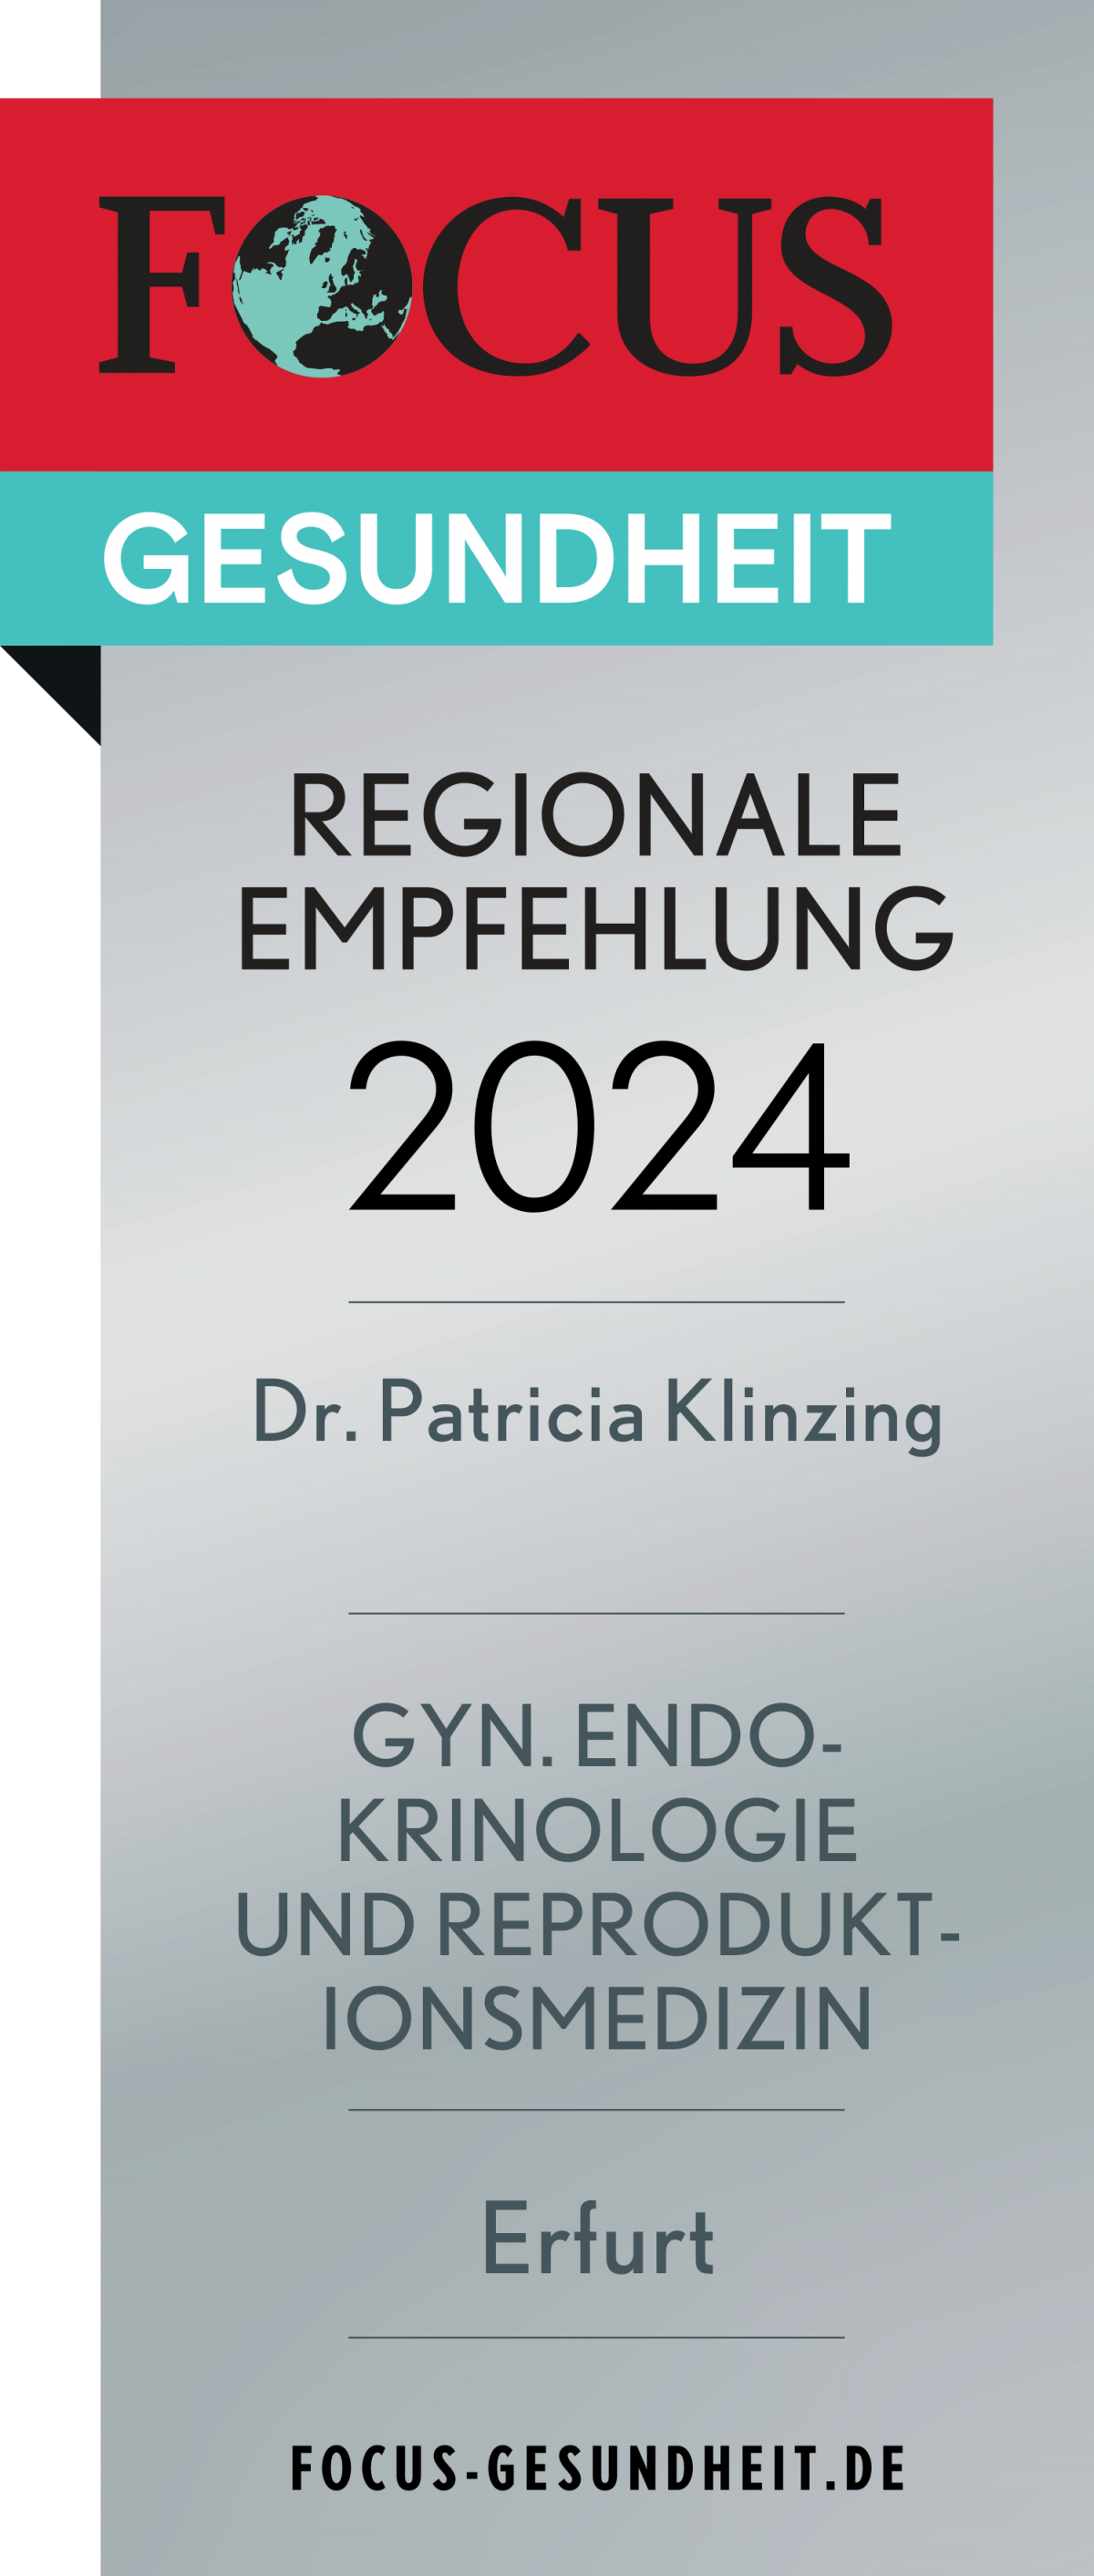 _2024_dr-patricia-klinzing_gyn-endo-krinologie-und-reprodukt-ionsmedizin_erfurt_focus-gesundheitde_large